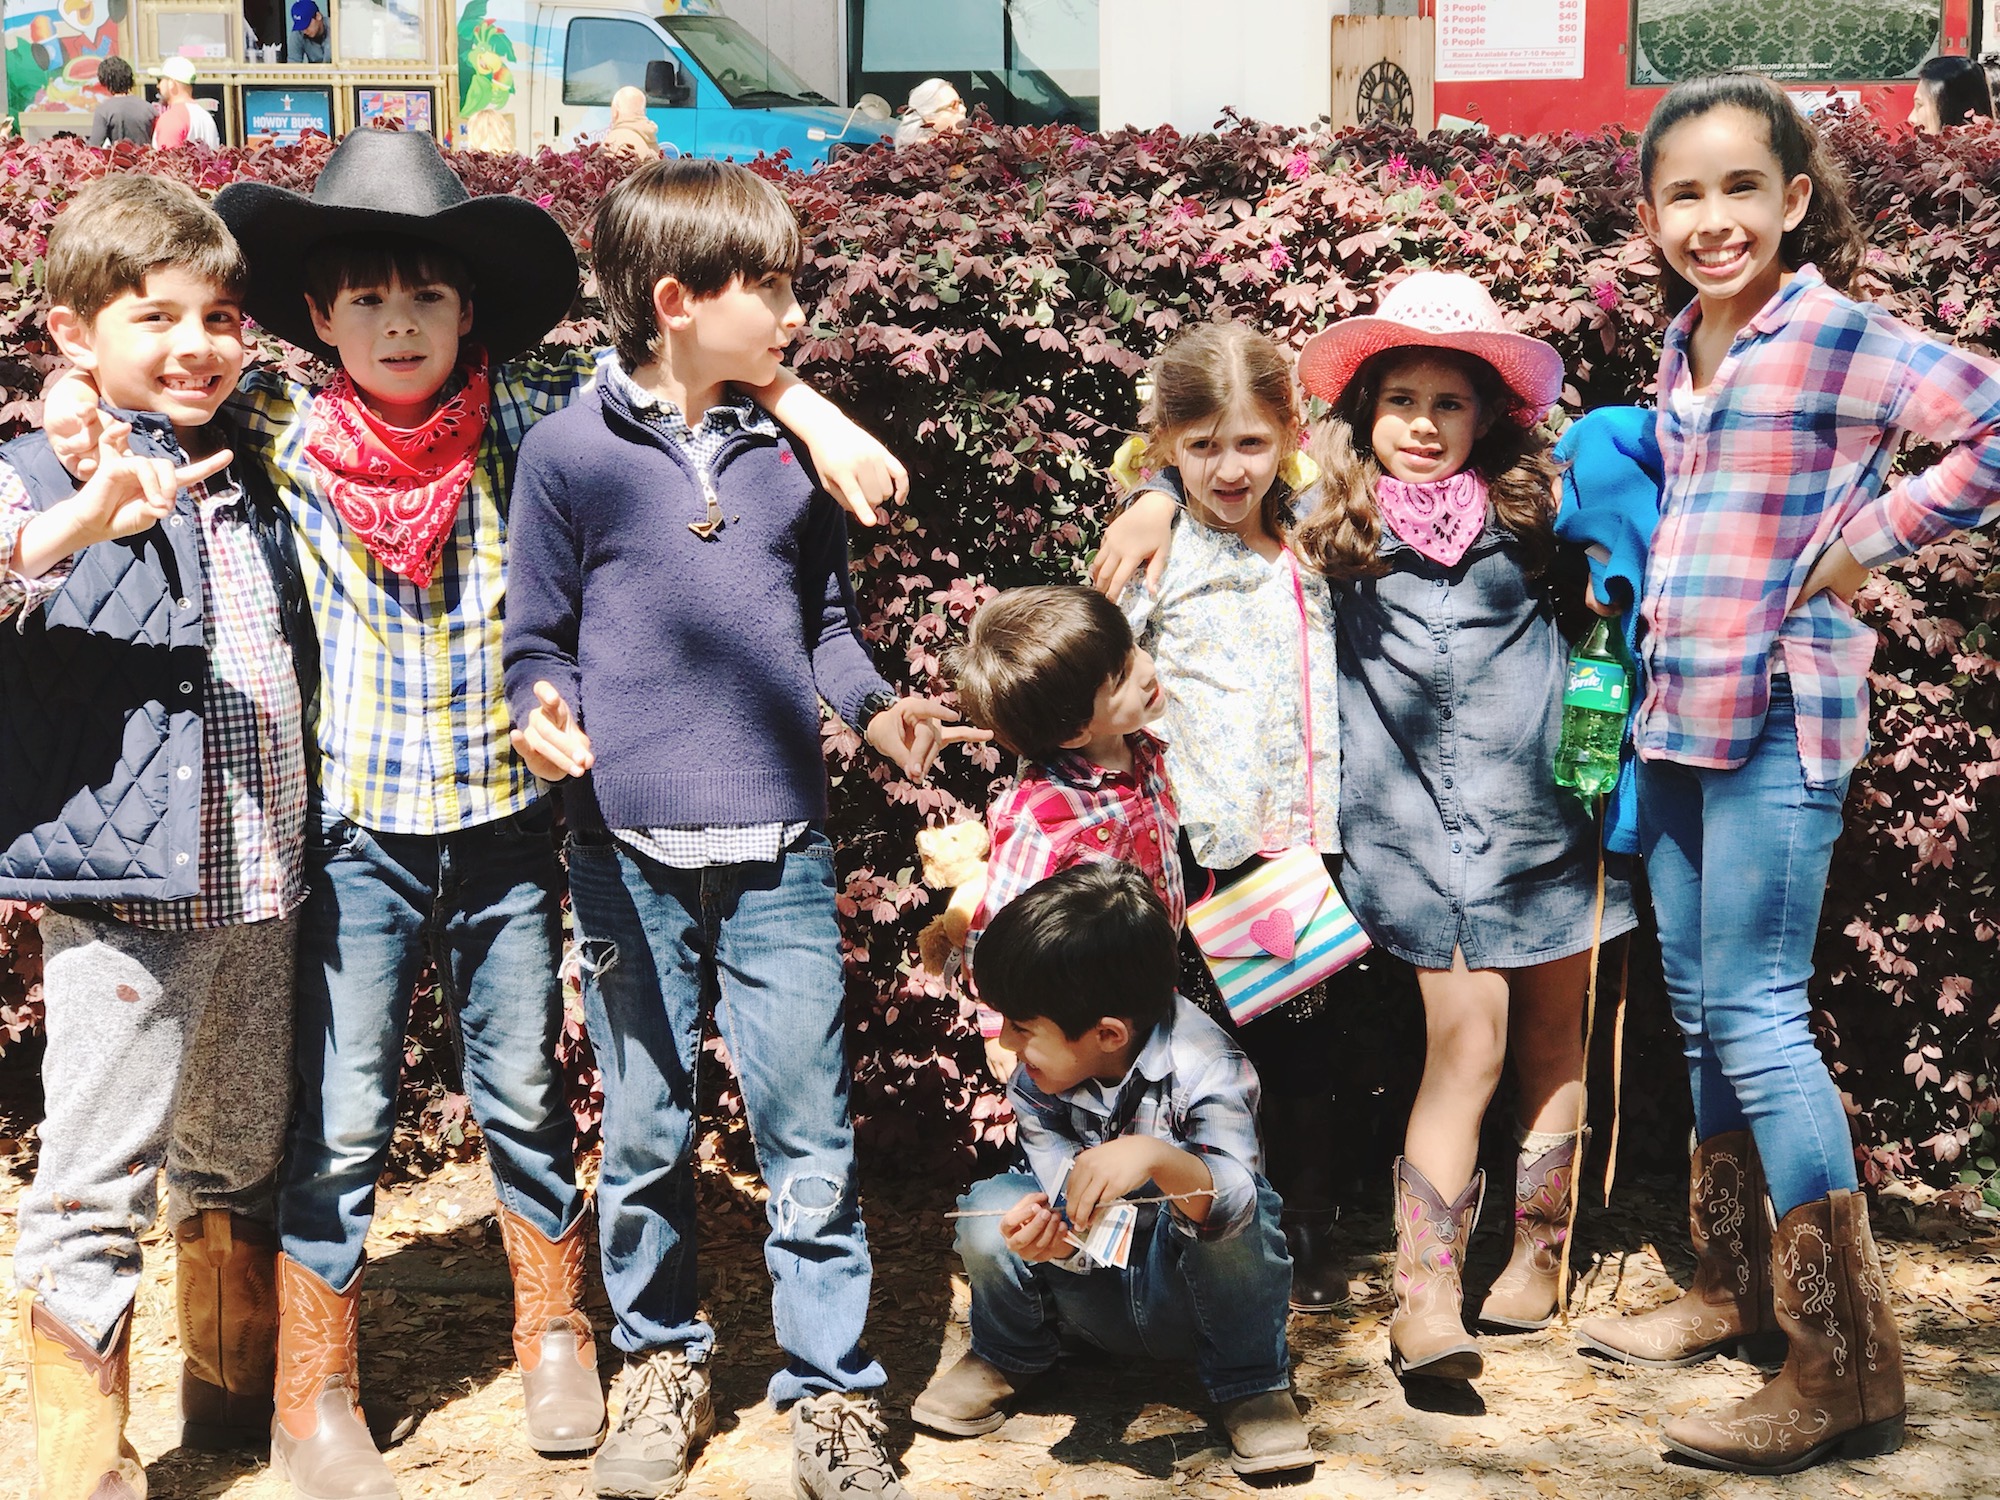 Houston Rodeo with kids | criandoando